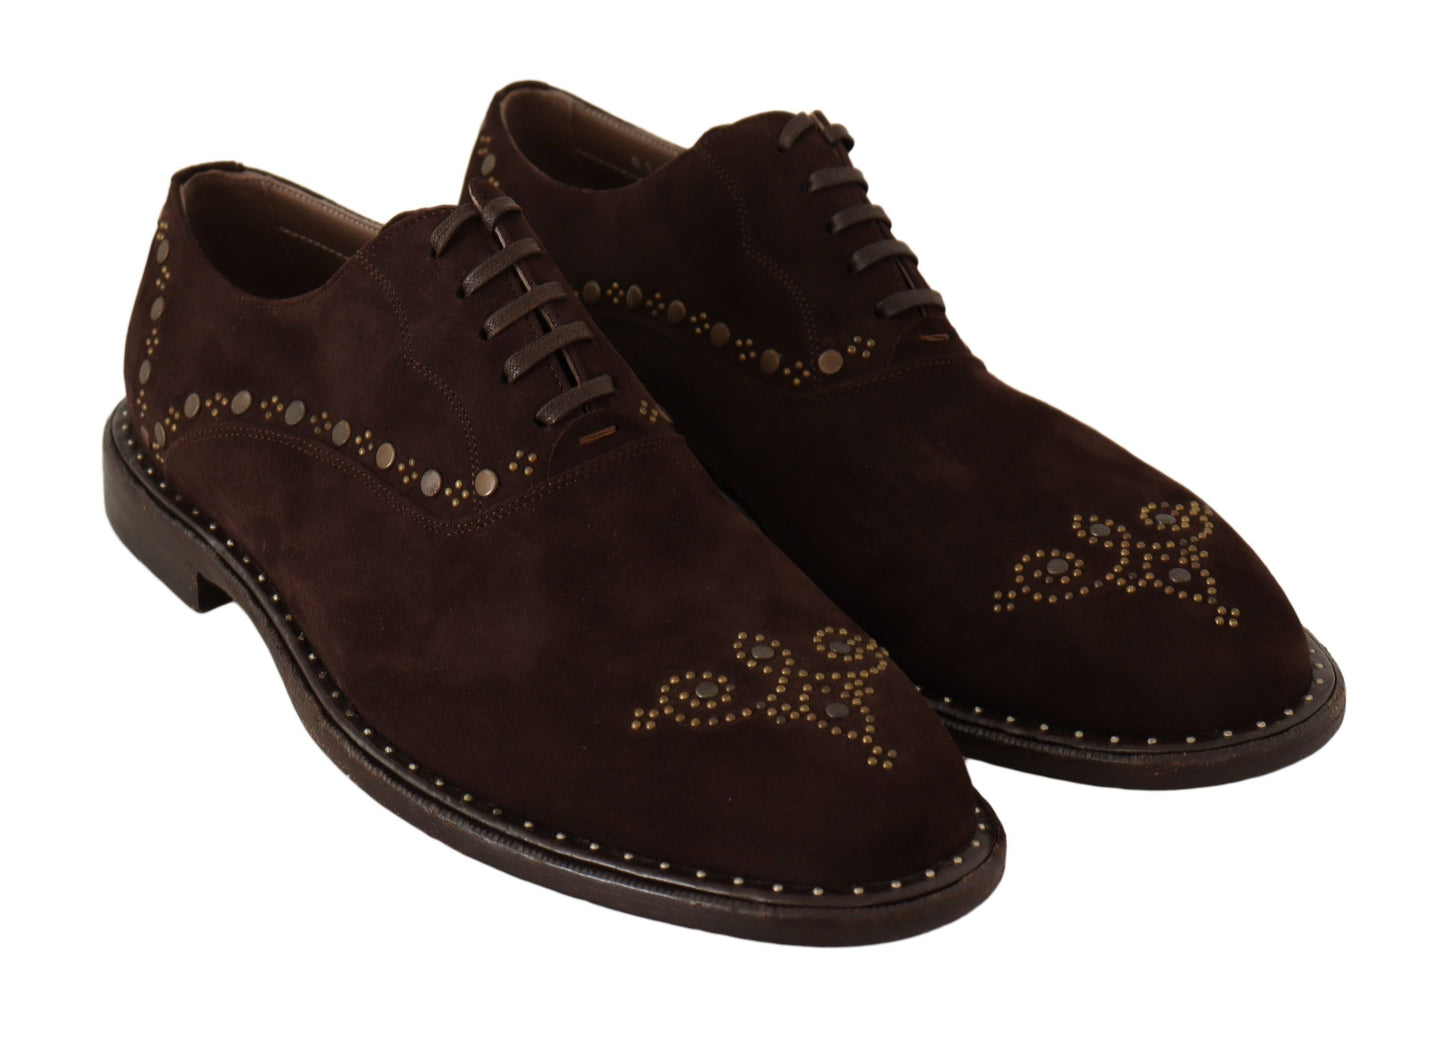 Elegant Brown Suede Studded Derby Shoes